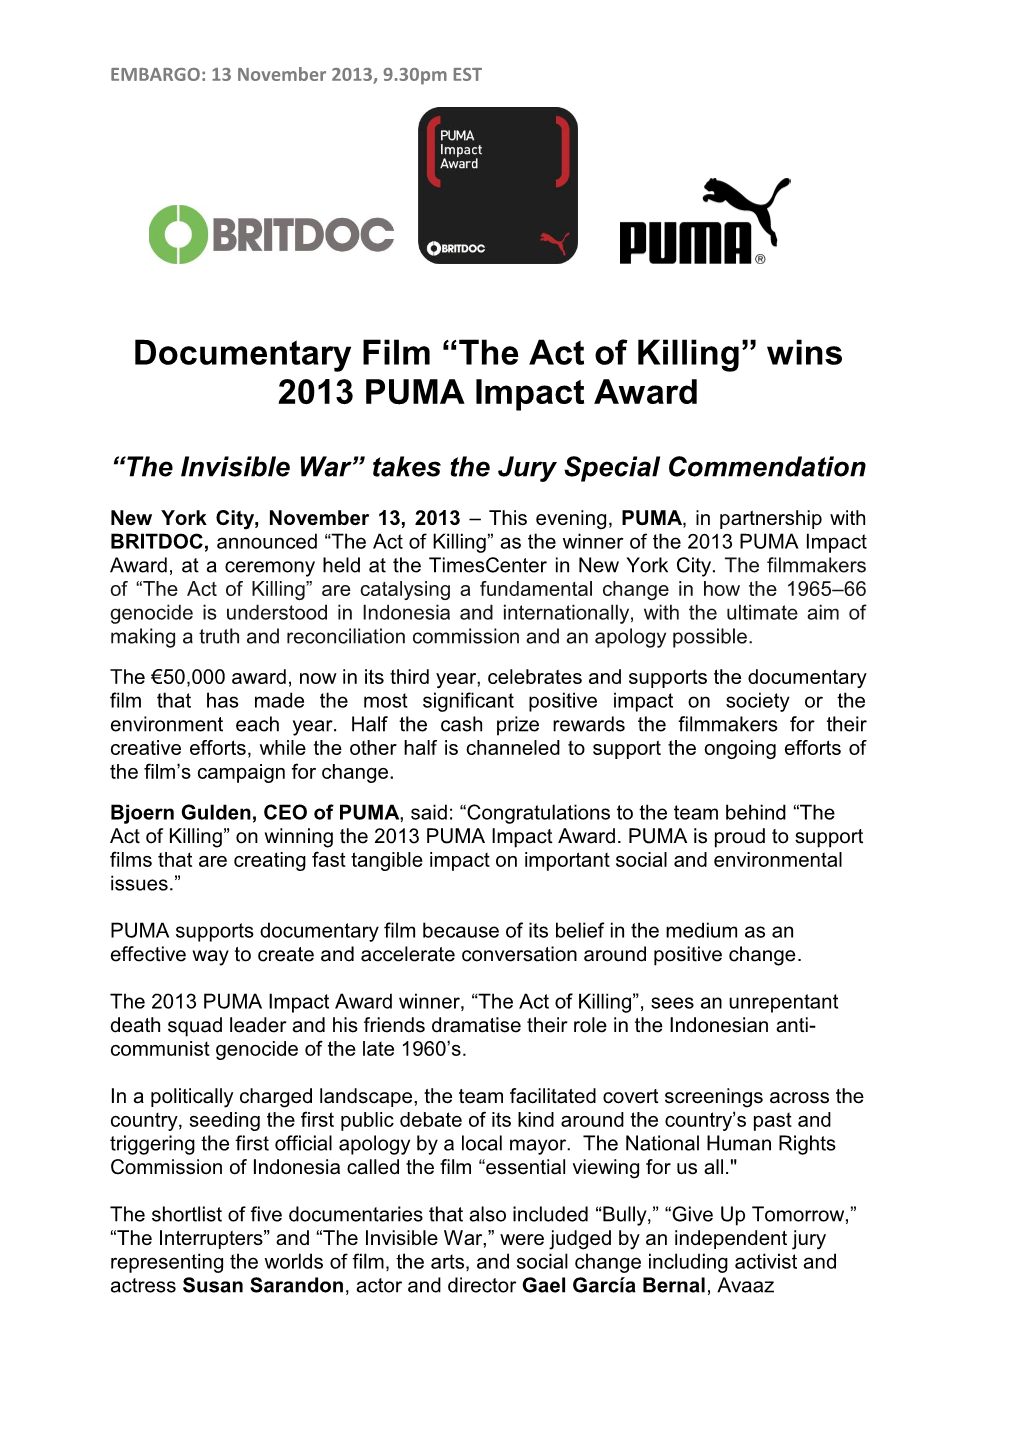 Documentary Film “The Act of Killing” Wins 2013 PUMA Impact Award